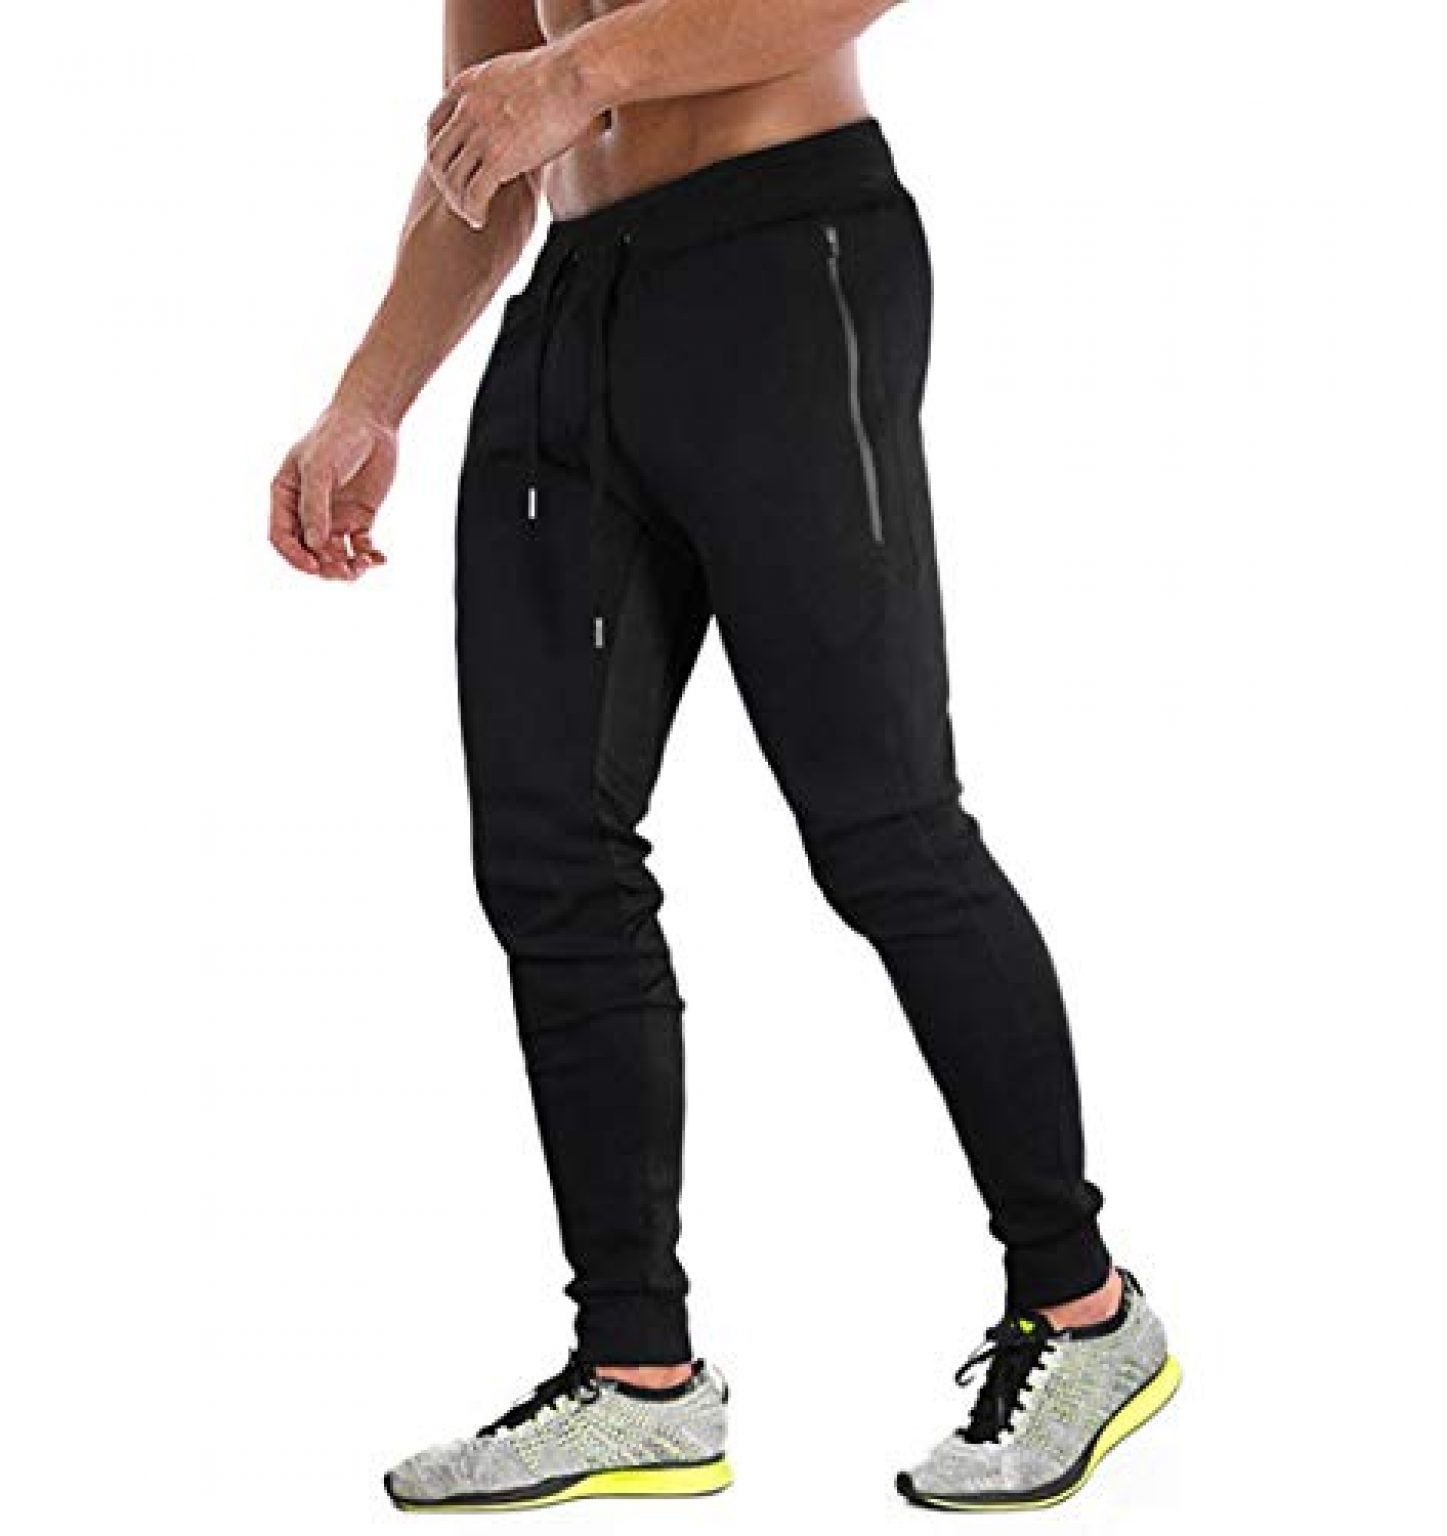 KEFITEVD Men's Stretch Jogging Bottoms with Zip Pockets Cotton Sports ...